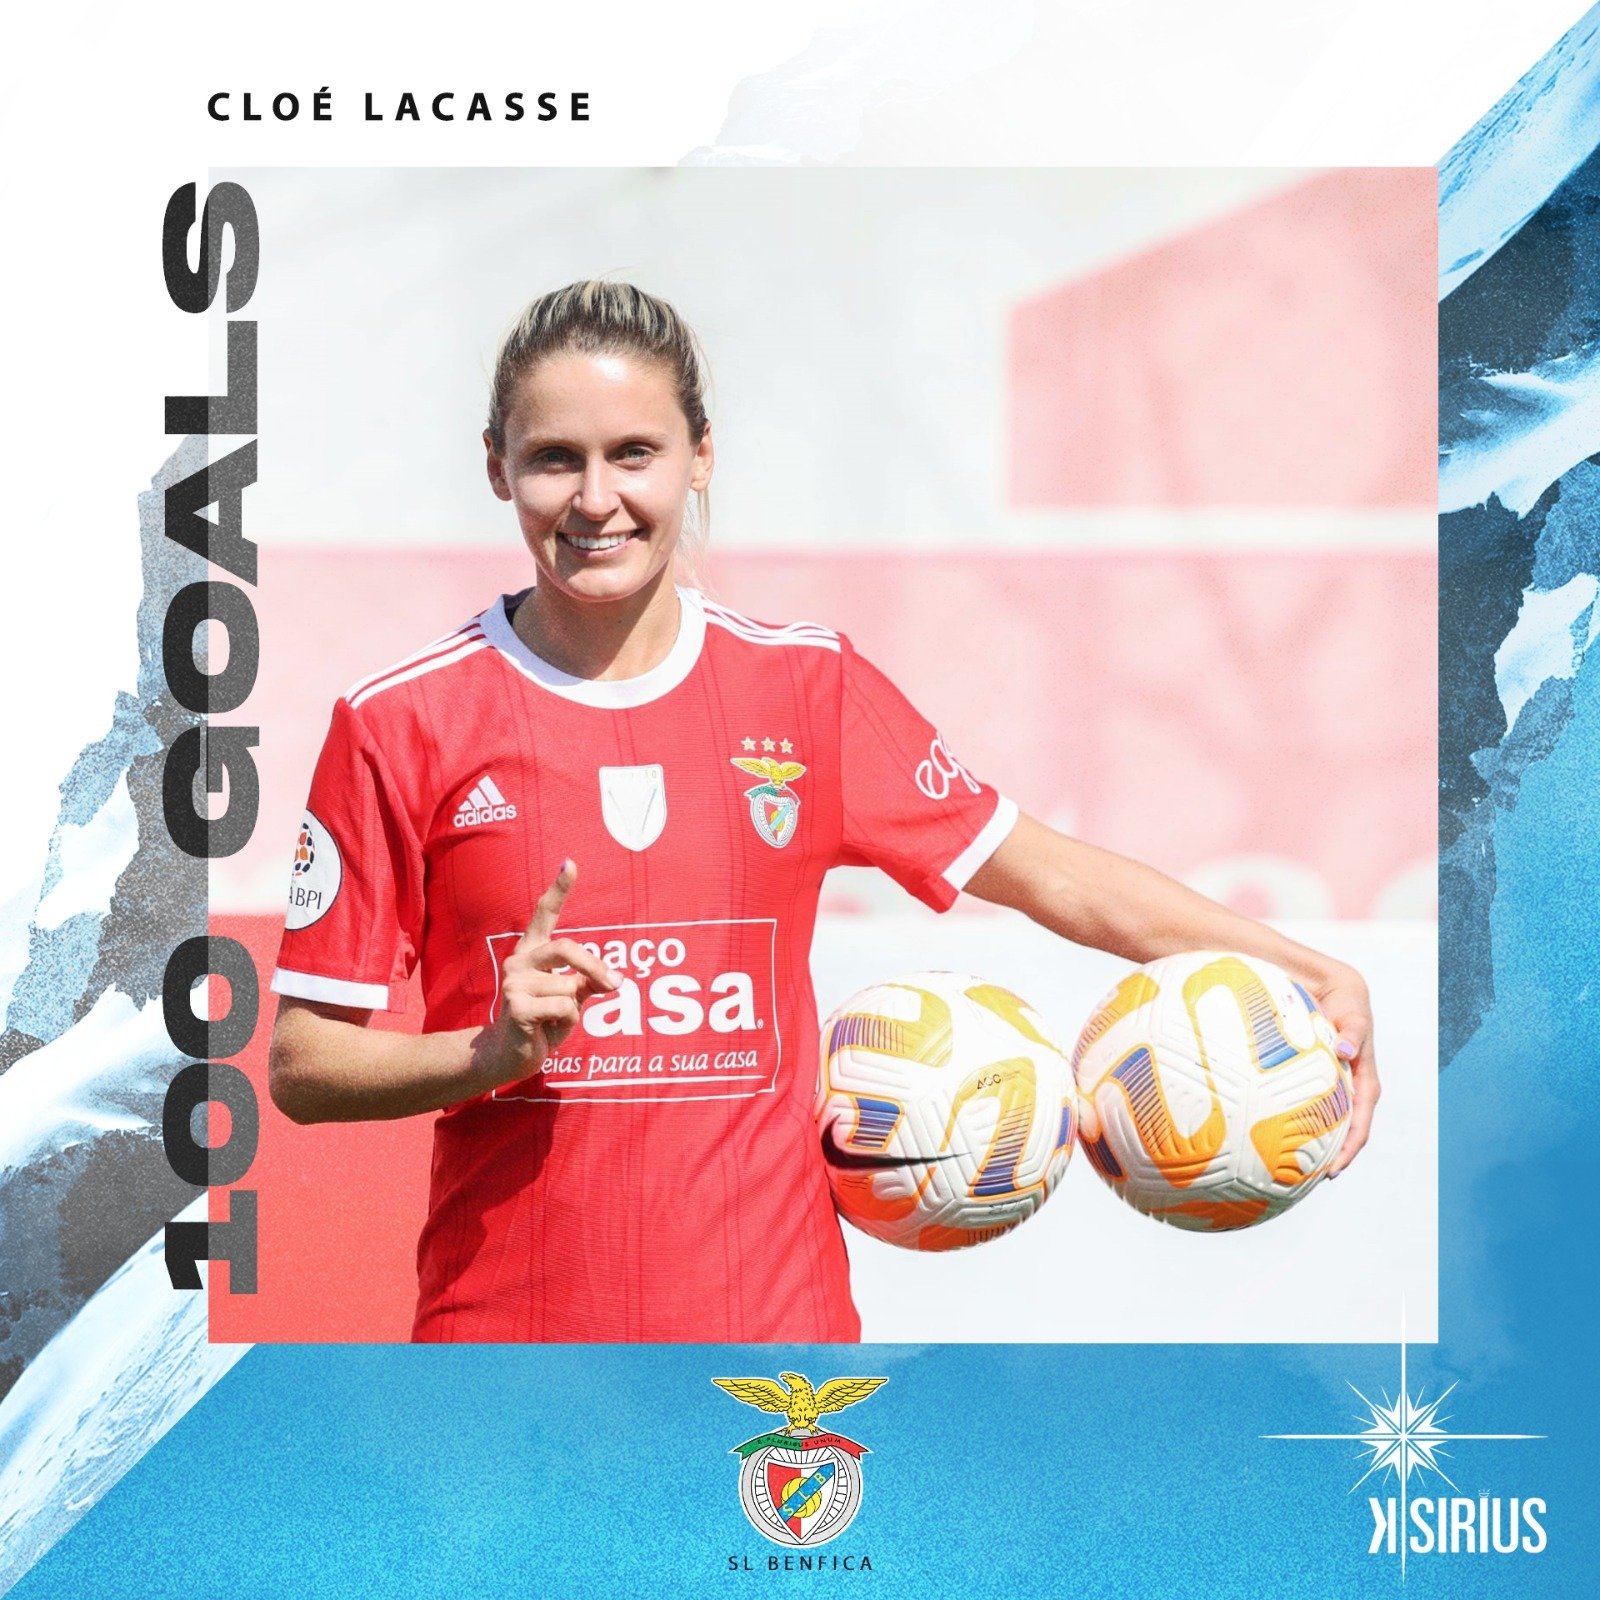 100 Goals: Cloé Lacasse (SL Benfica)